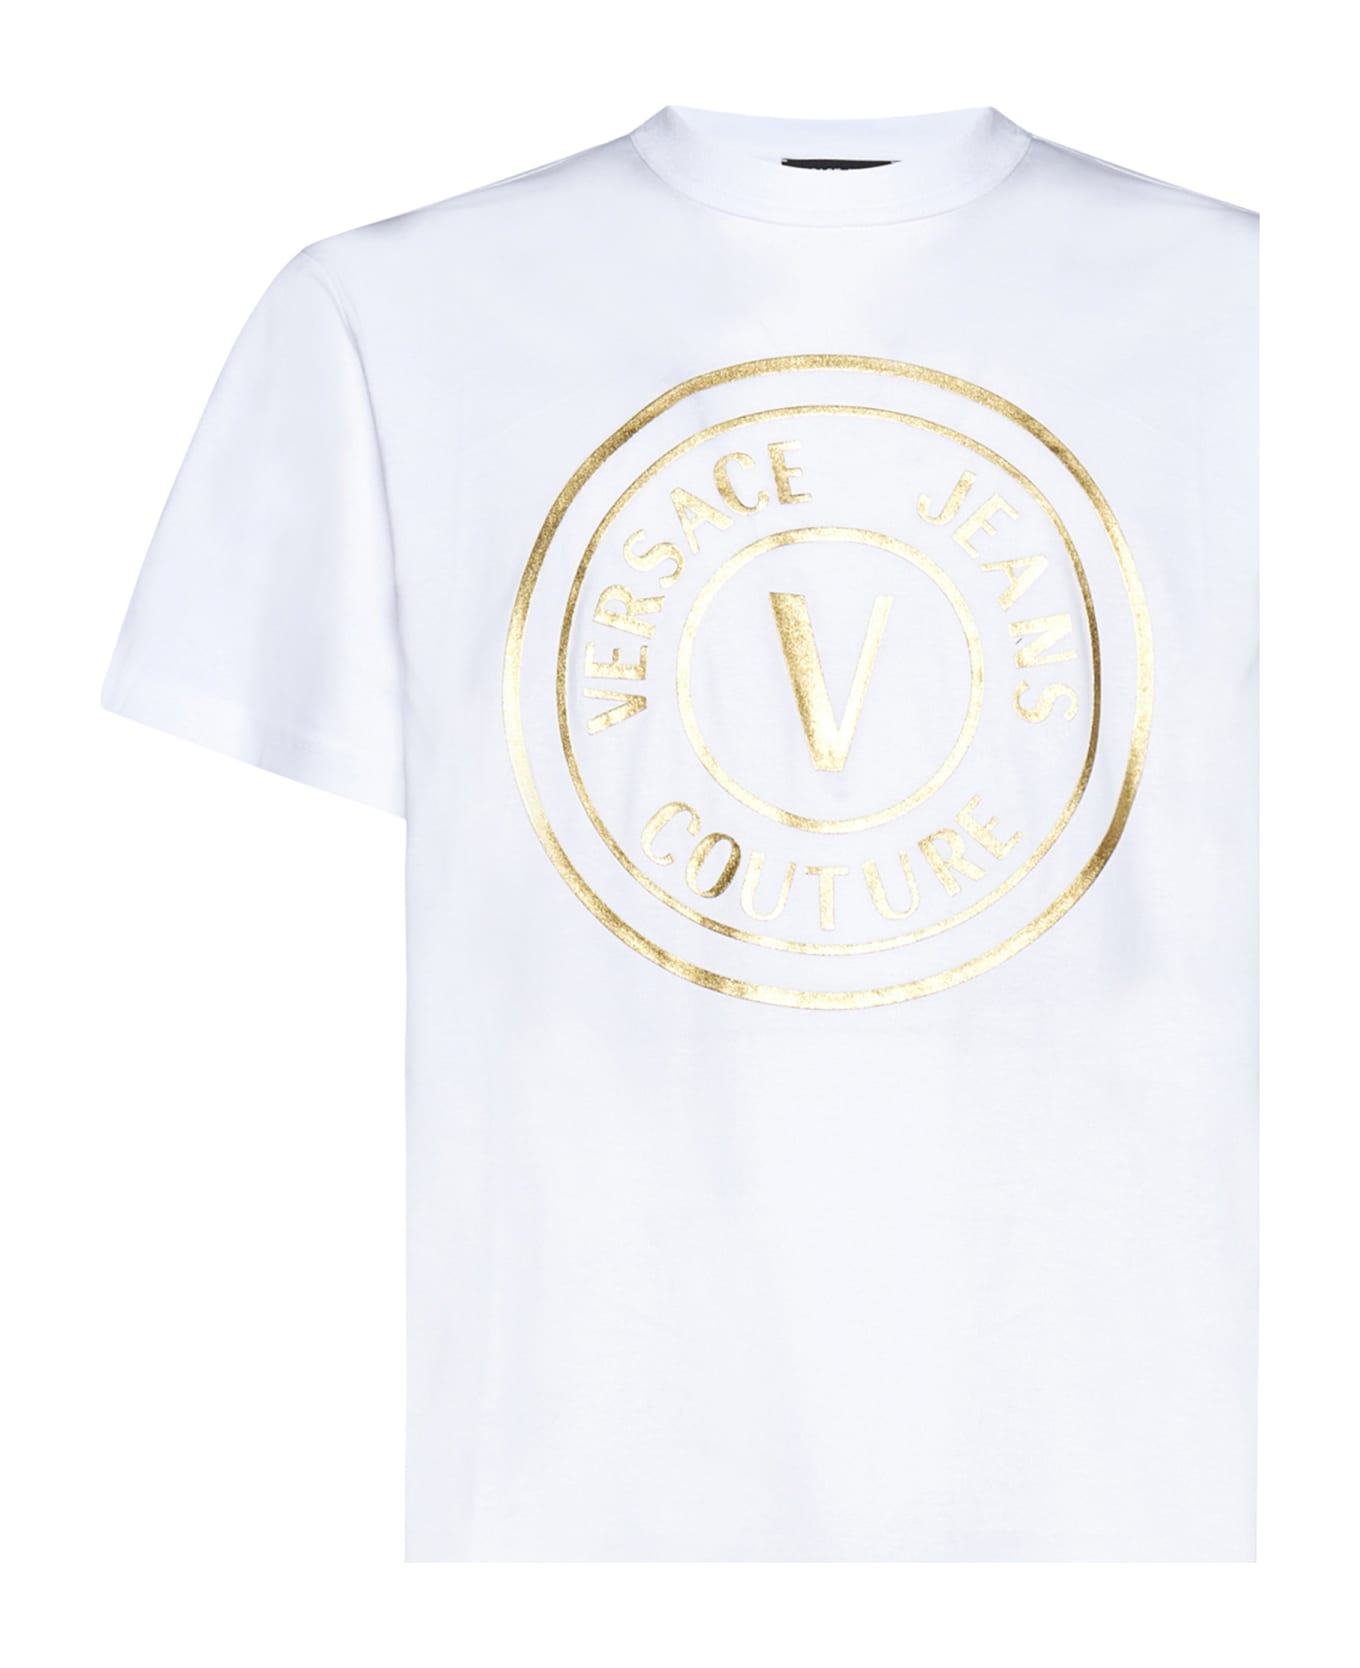 Versace Jeans Couture V Emblem T-shirt - White gold